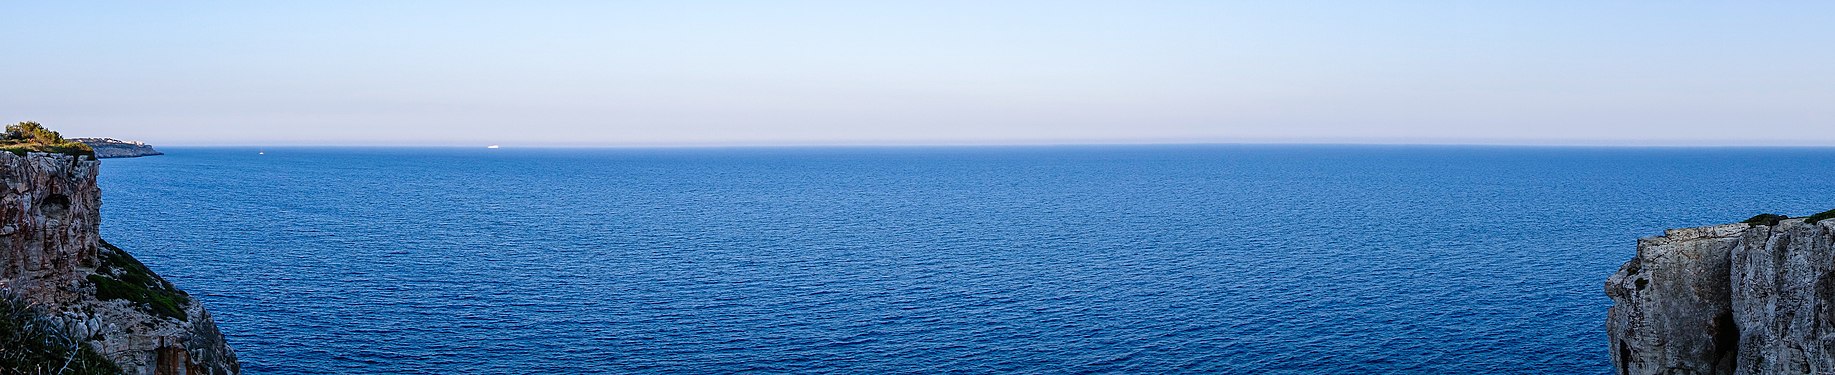 The blue Mediterranean near Majorca